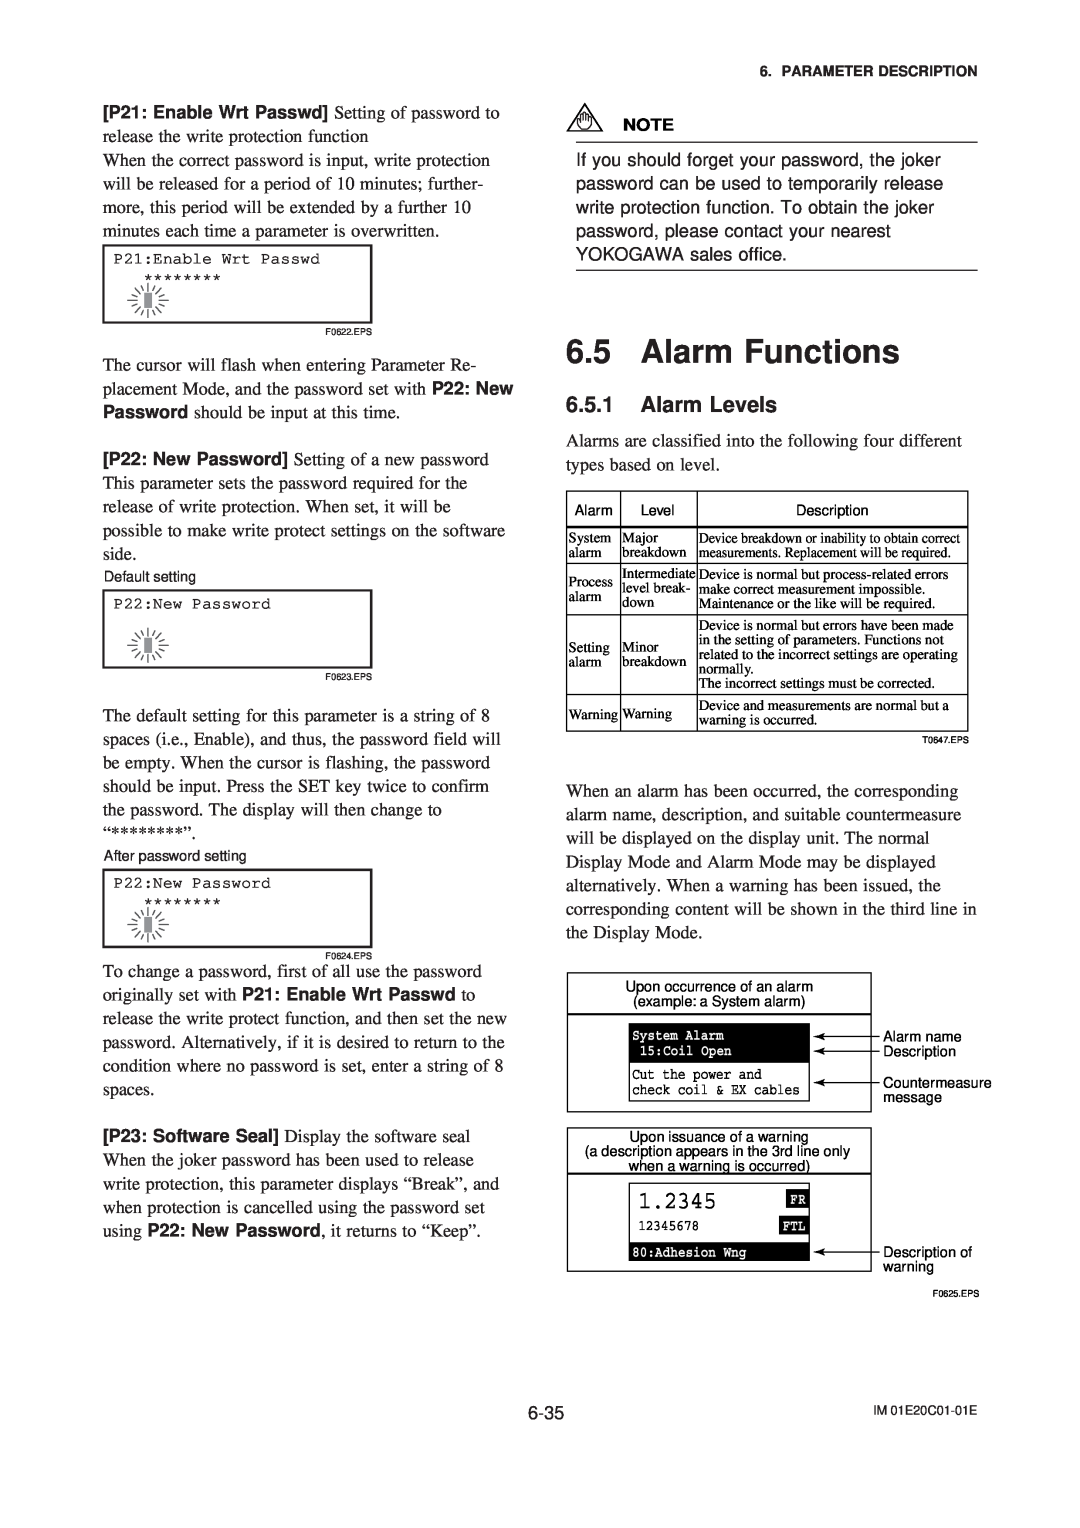 APC AXFA11G user manual Alarm Functions, Alarm Levels 